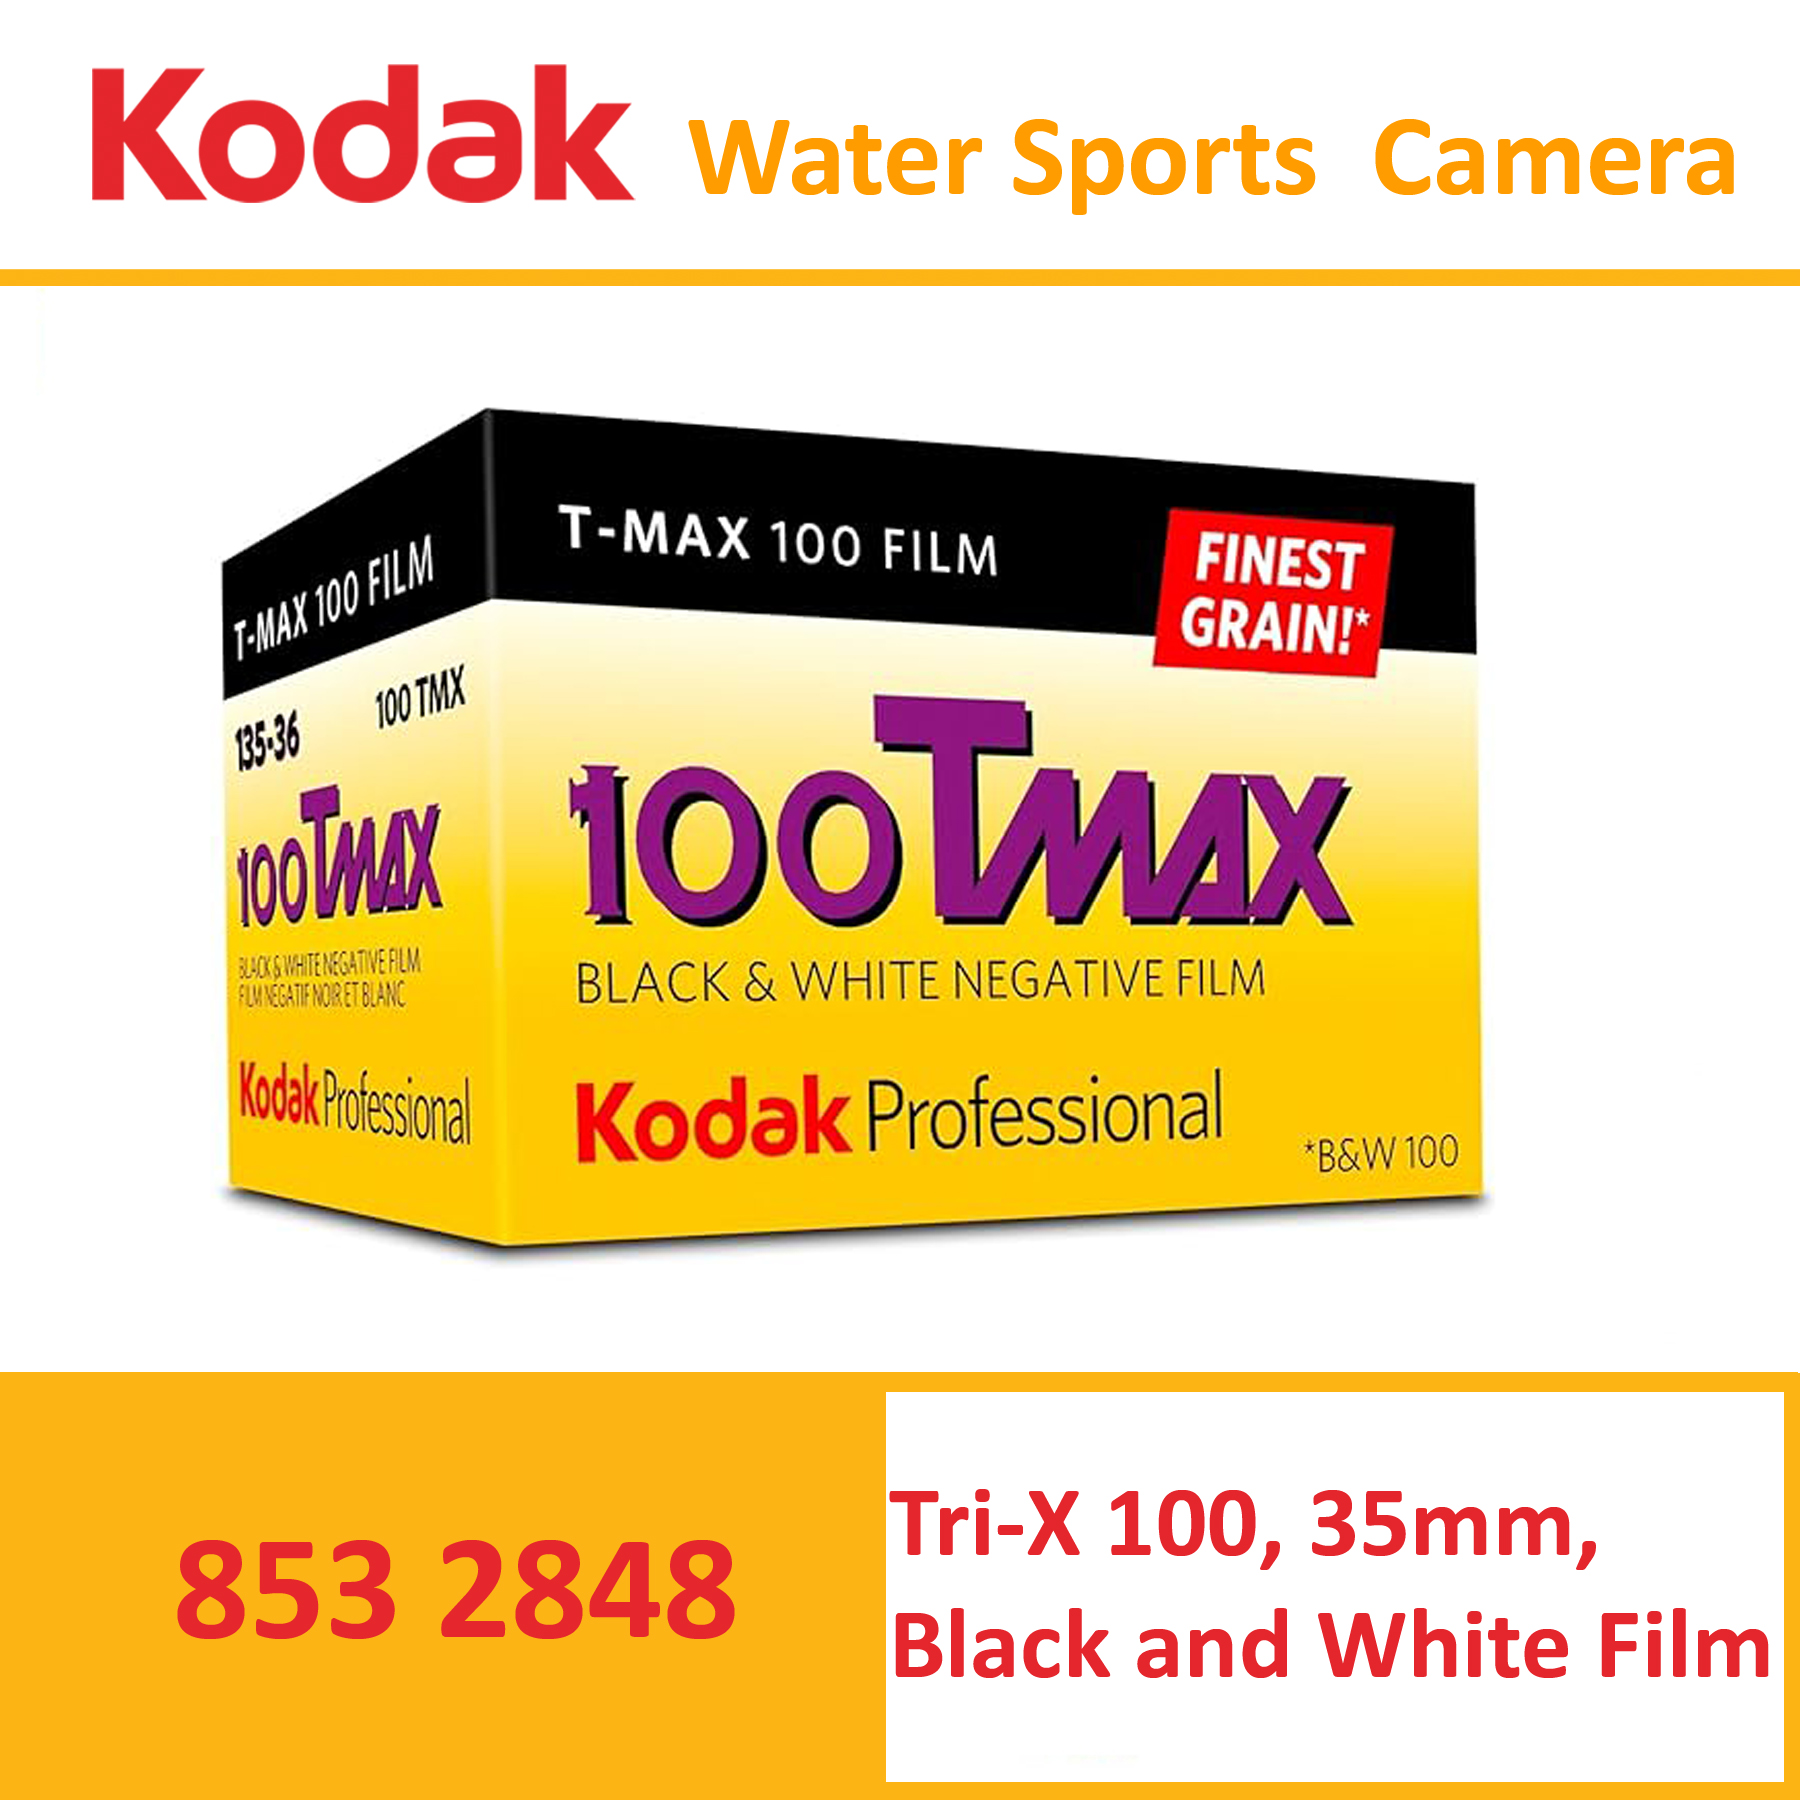 KODAK PROFESSIONAL 100 TMAX BLACK AND WHITE NEGATIVE FILM